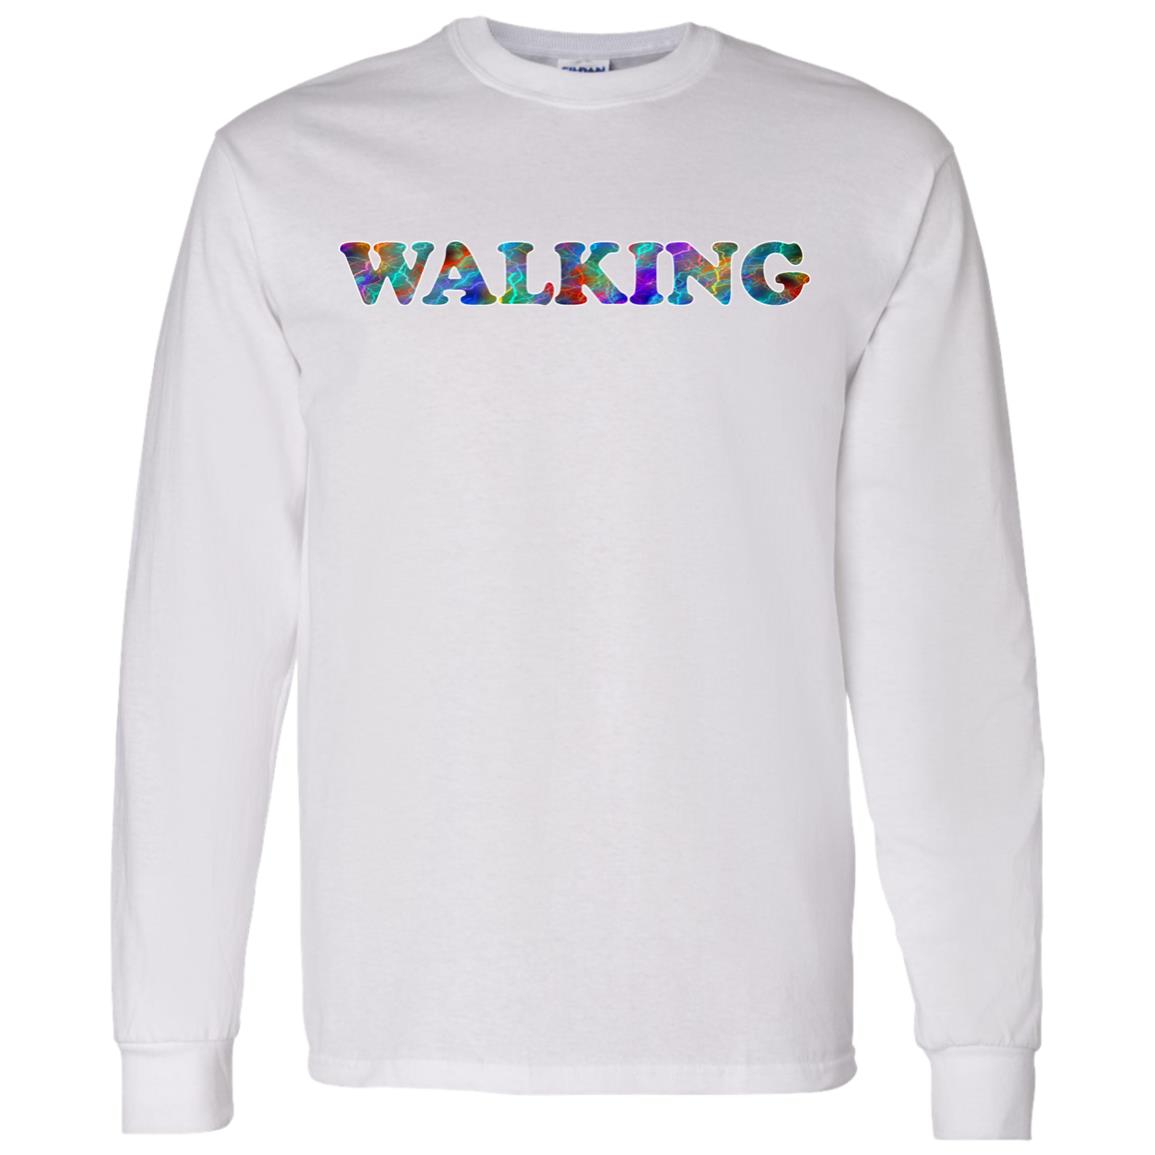 Walking Long Sleeve Sport T-Shirt